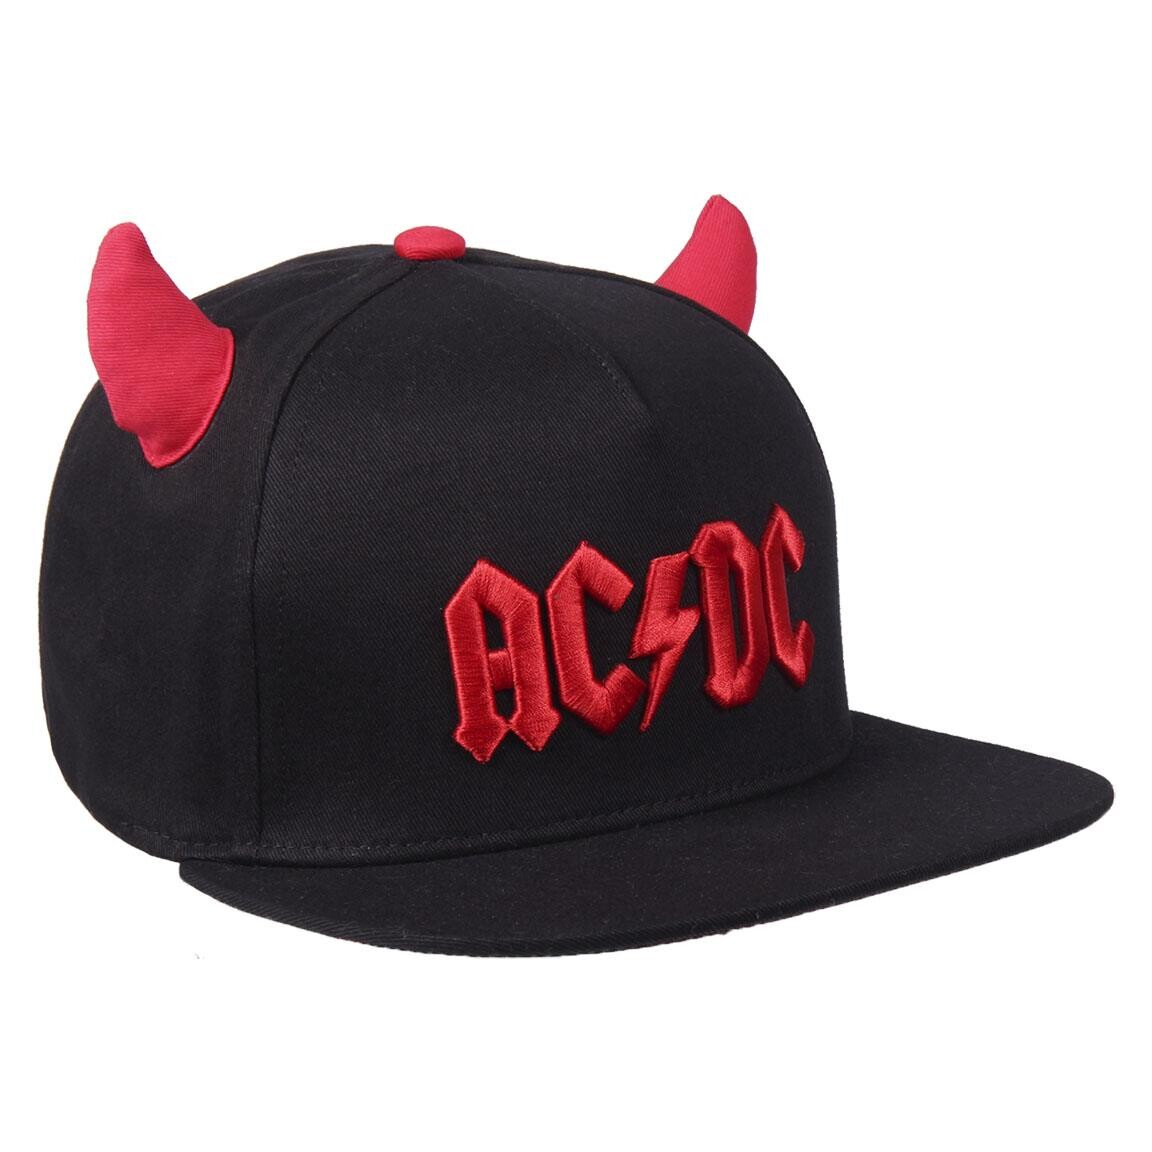 AC/DC | Clothes and accessories merchandise fans